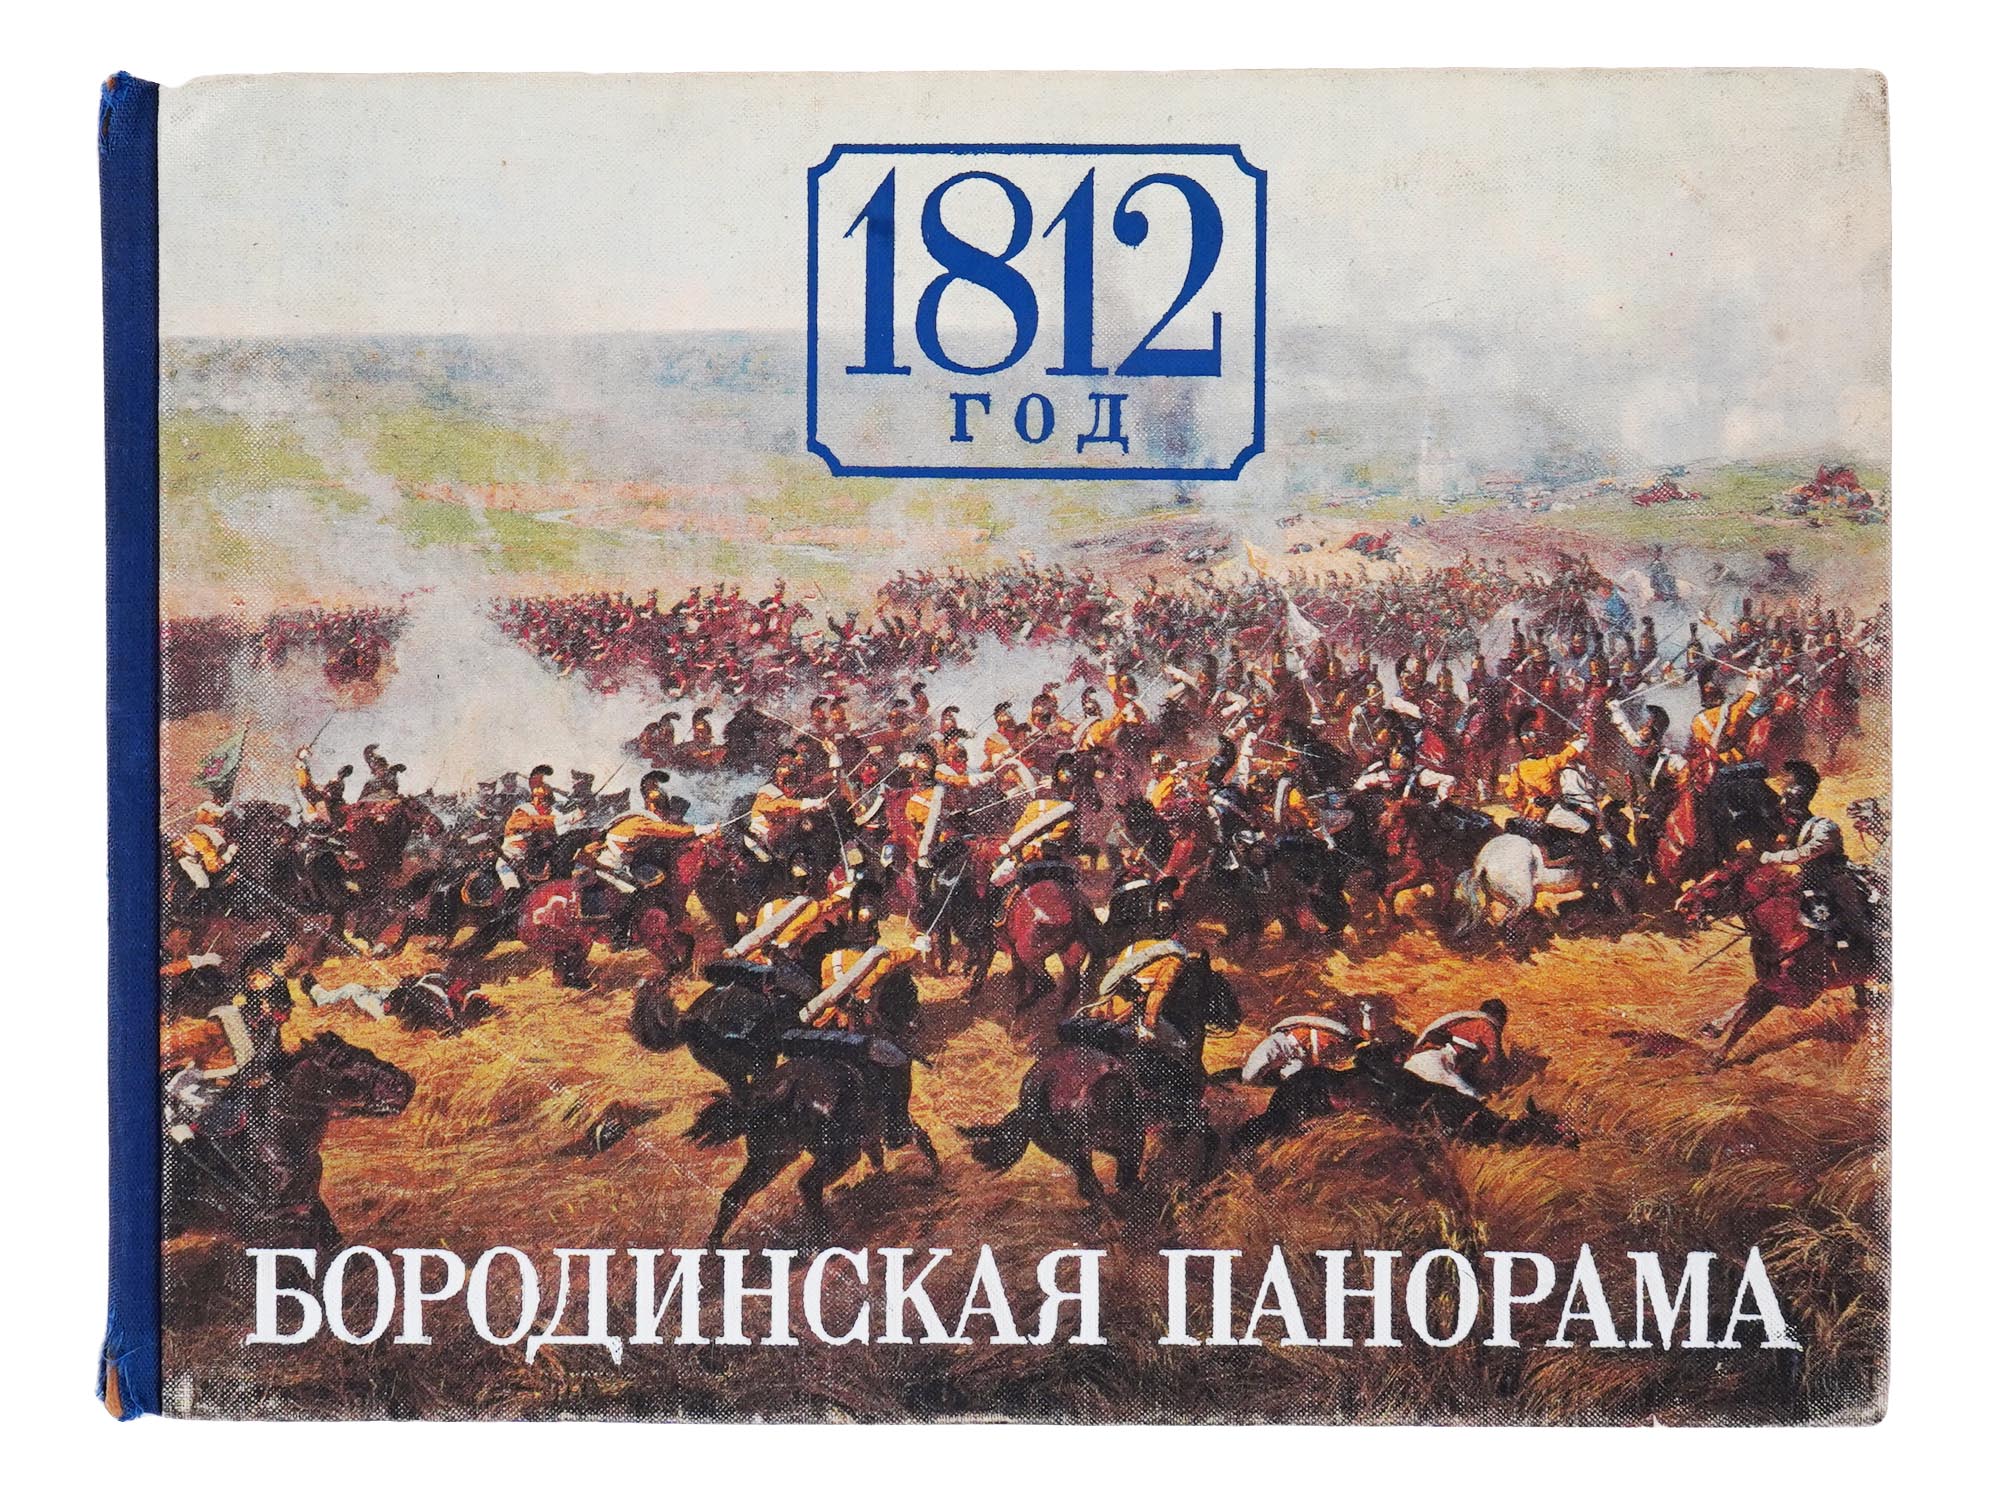 VINTAGE ALBUM BORODINO PANORAMA YEAR 1812 IN RUSSIAN PIC-1